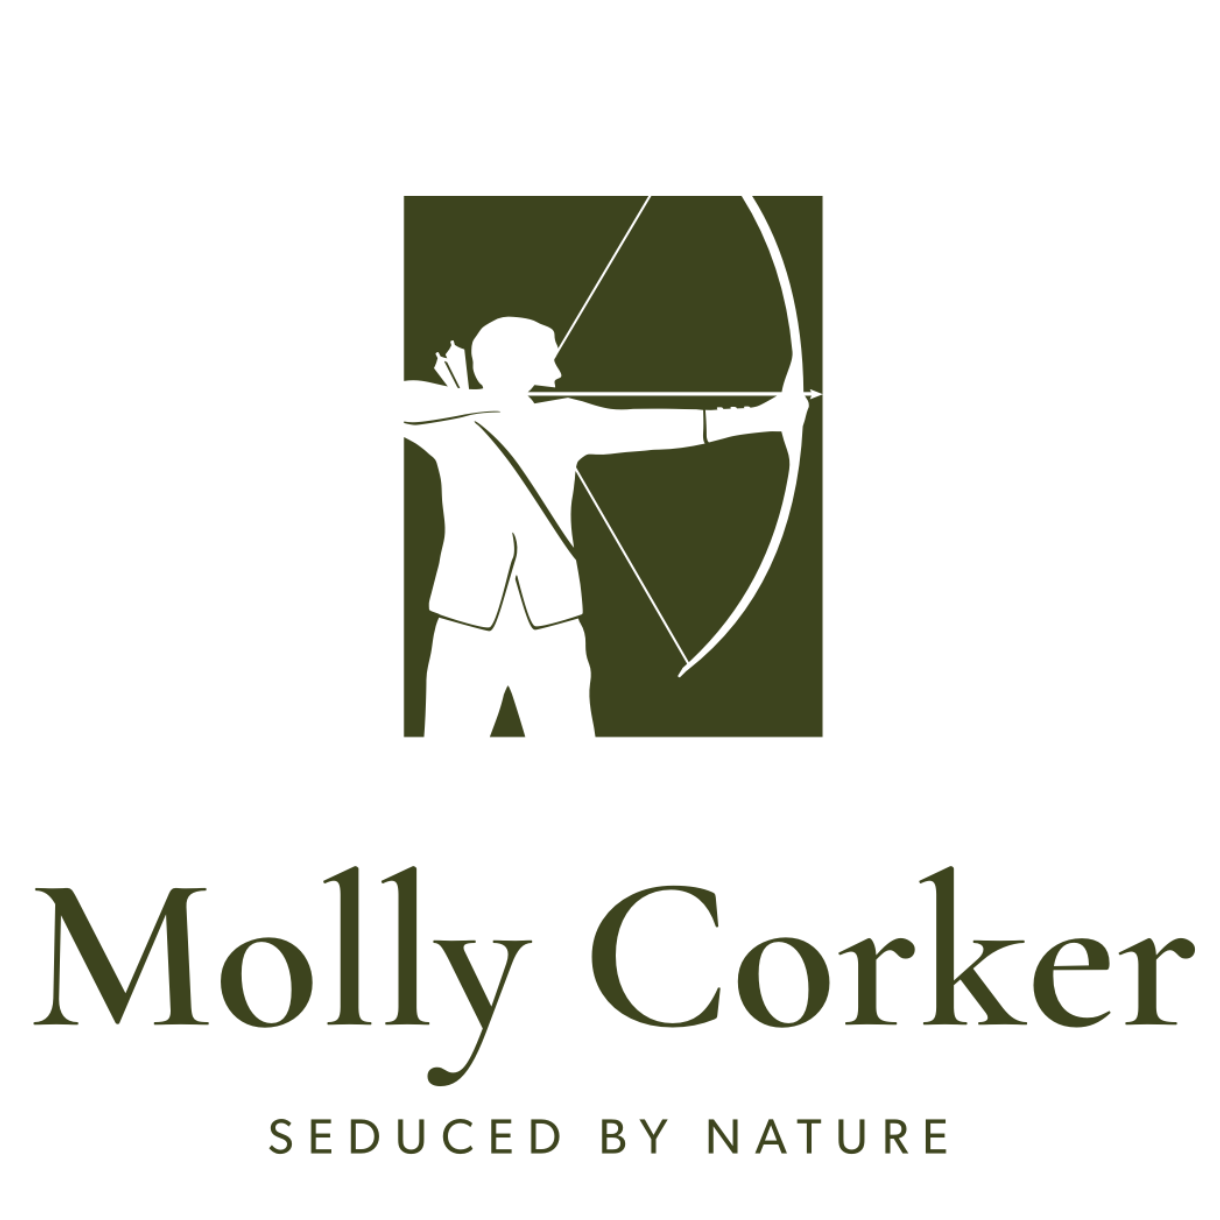 Molly Corker